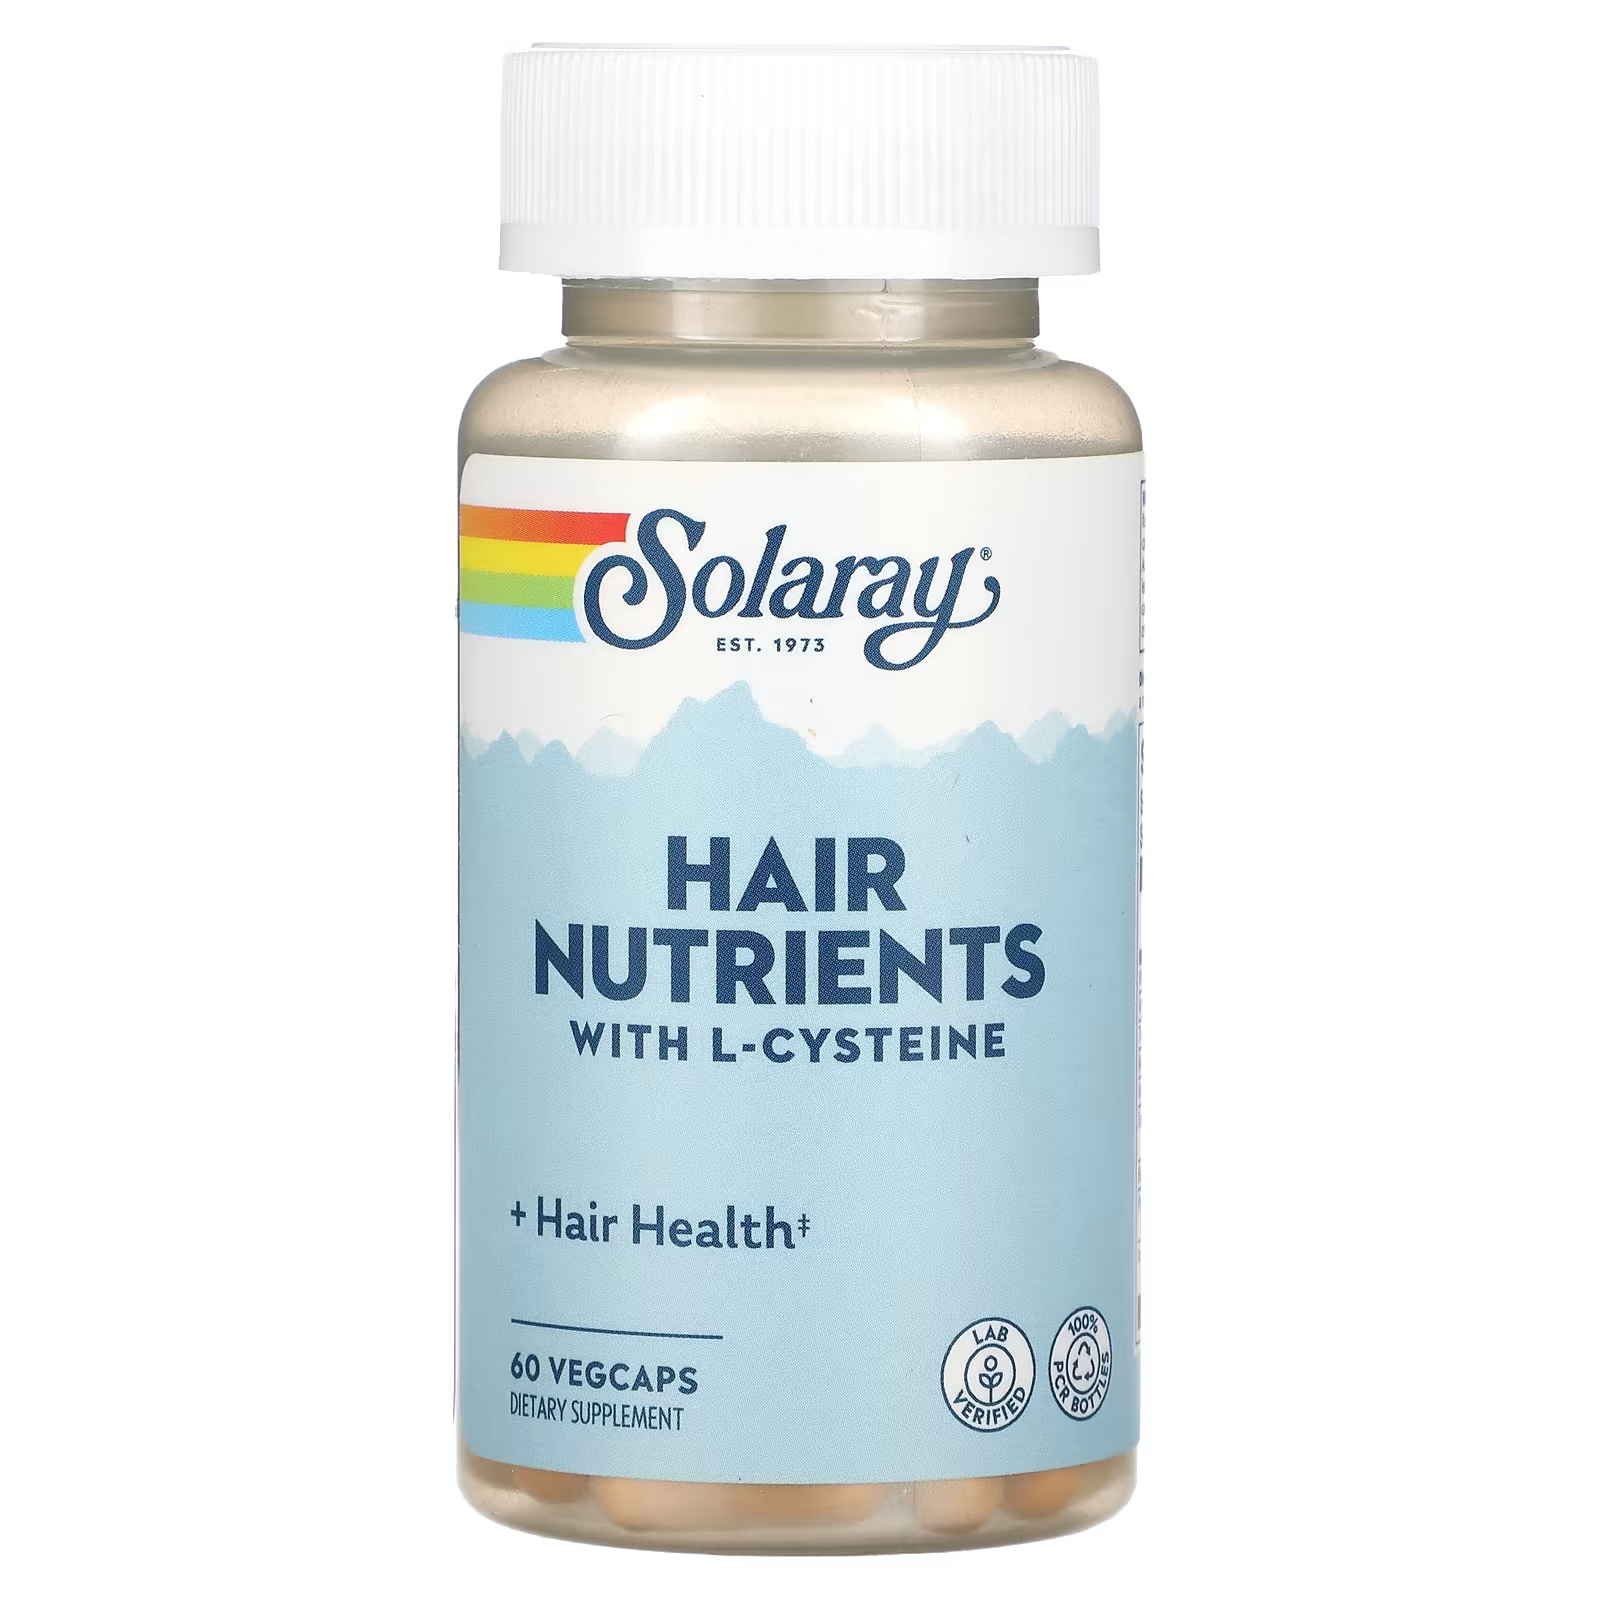 Пищевая добавка Solaray для волос, 60 капсул пищевая добавка solaray для волос 60 капсул